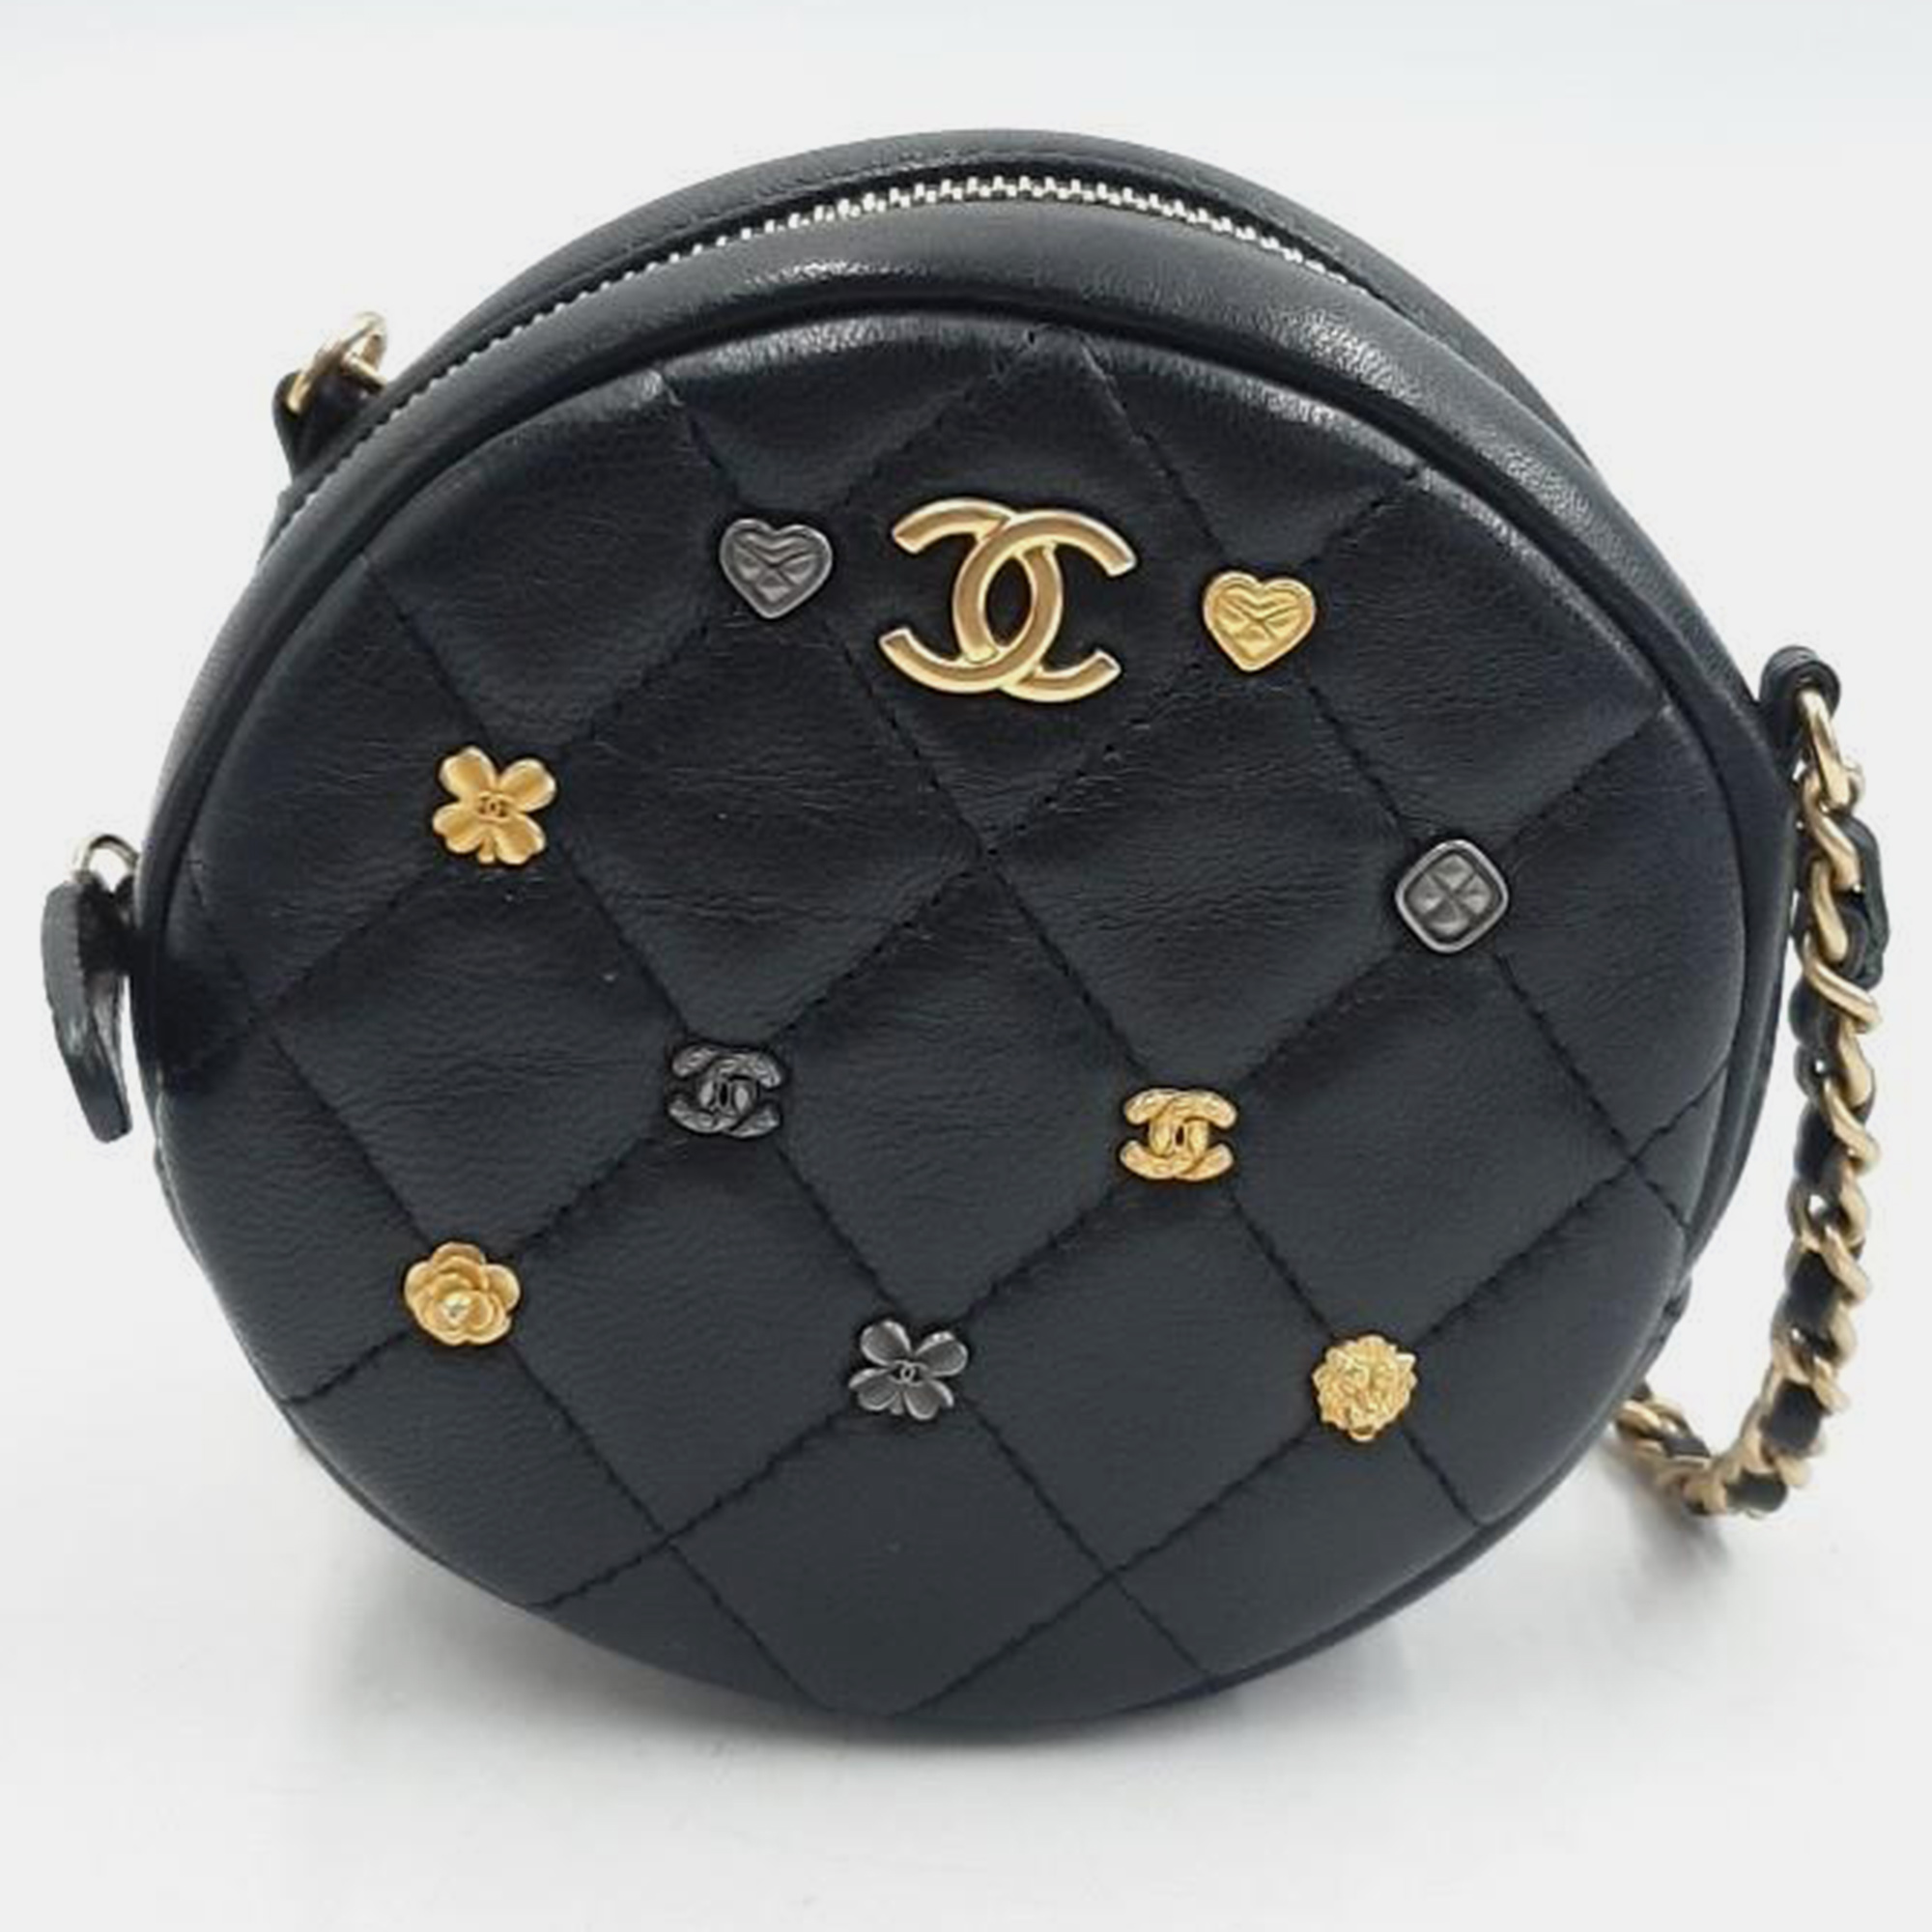 Chanel black leather round mini crossbody bag